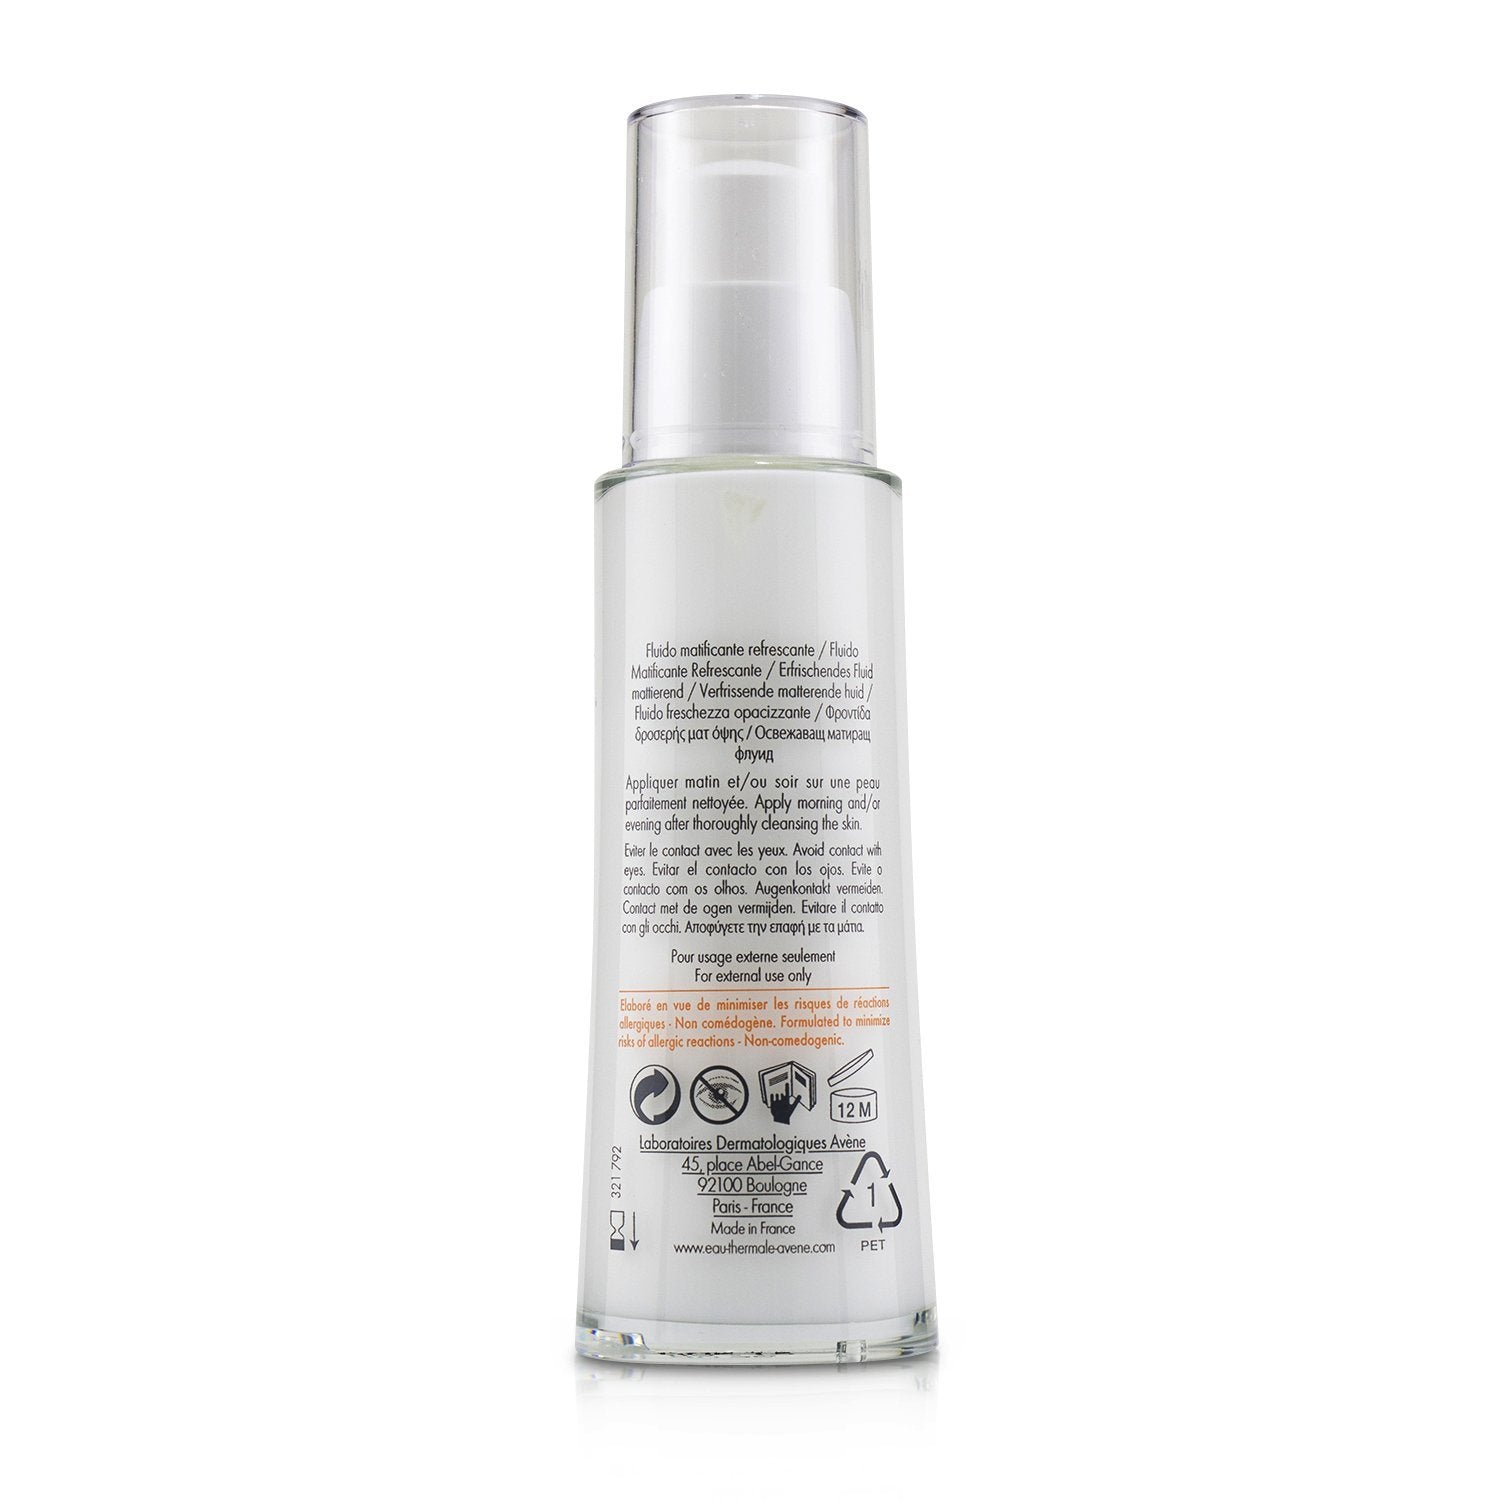 Bottle of AVENE - Refreshing Mattifying Fluid - For Normal to Combination Sensitive Skin 20938 50ml/1.6oz on a white background.